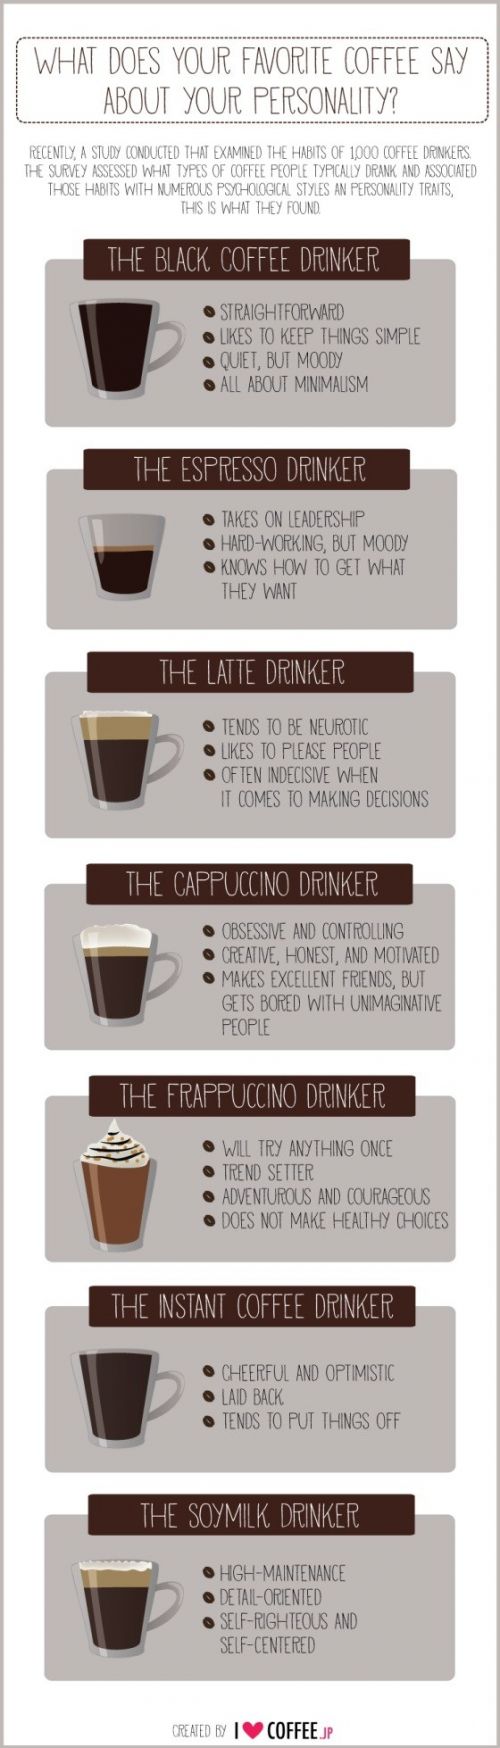 Infográfico sobre as preferencias de café